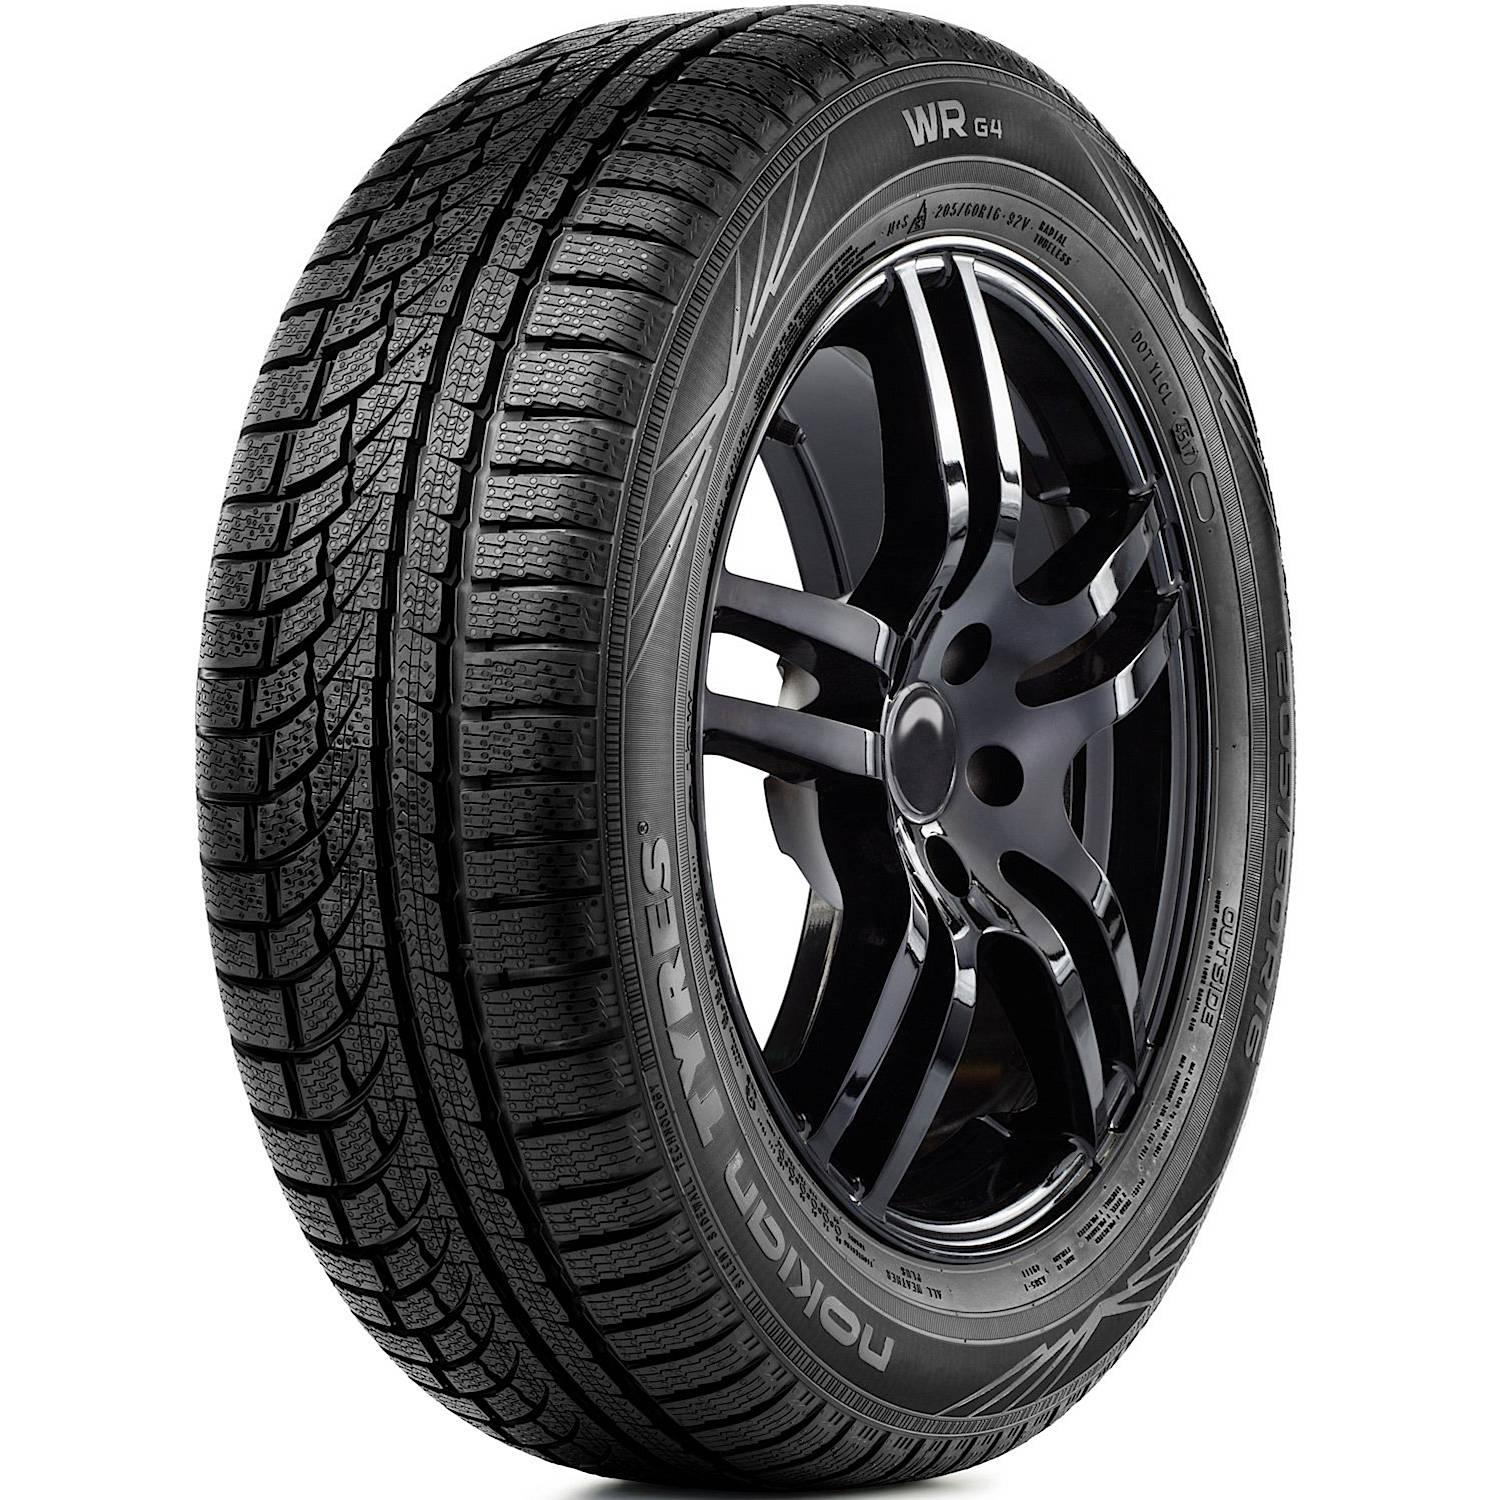 NOKIAN WR G4 225/40R18 (25.1X8.9R 18) Tires